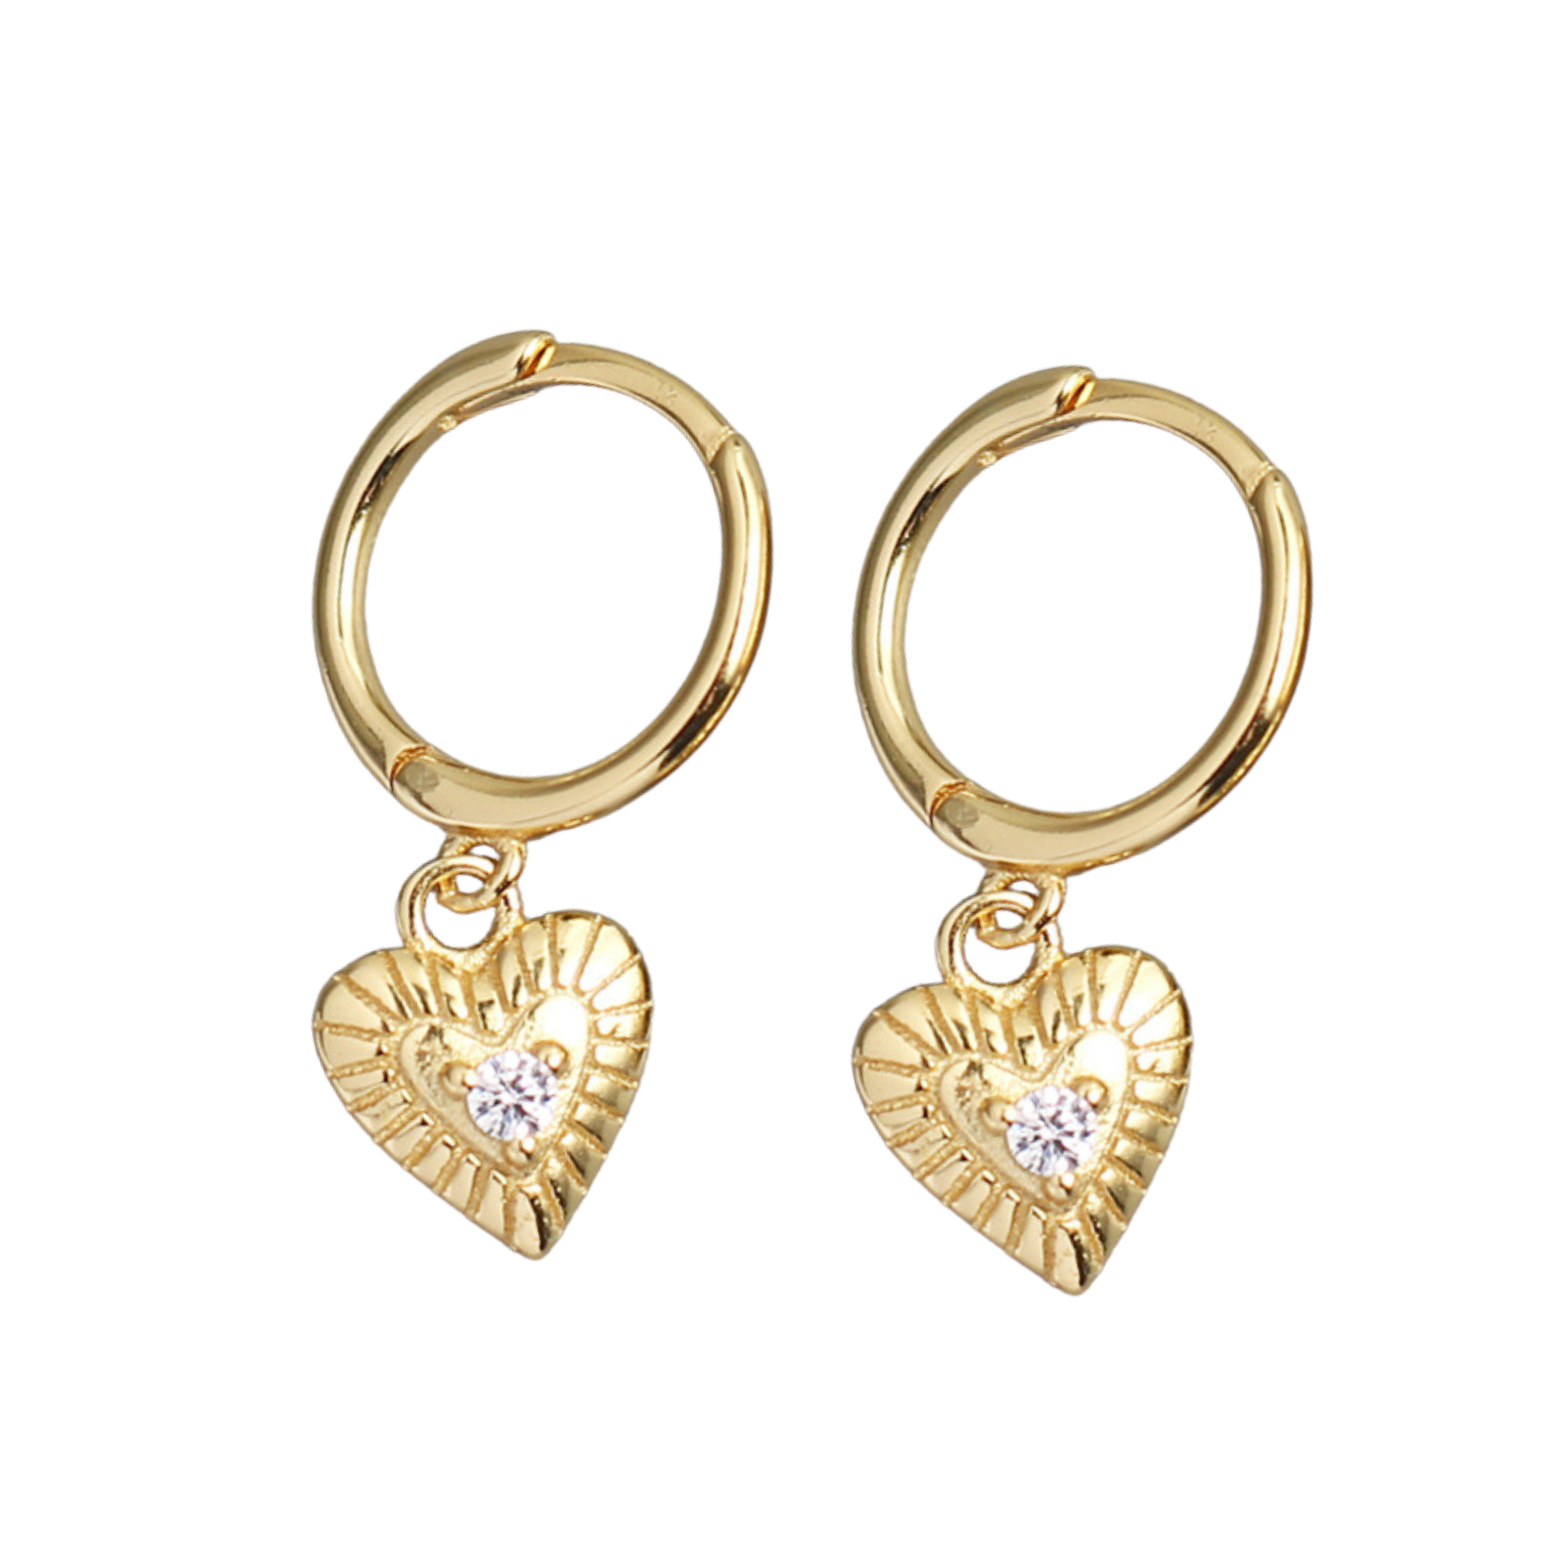 14K gold-plated hoop earrings in the shape of hearts